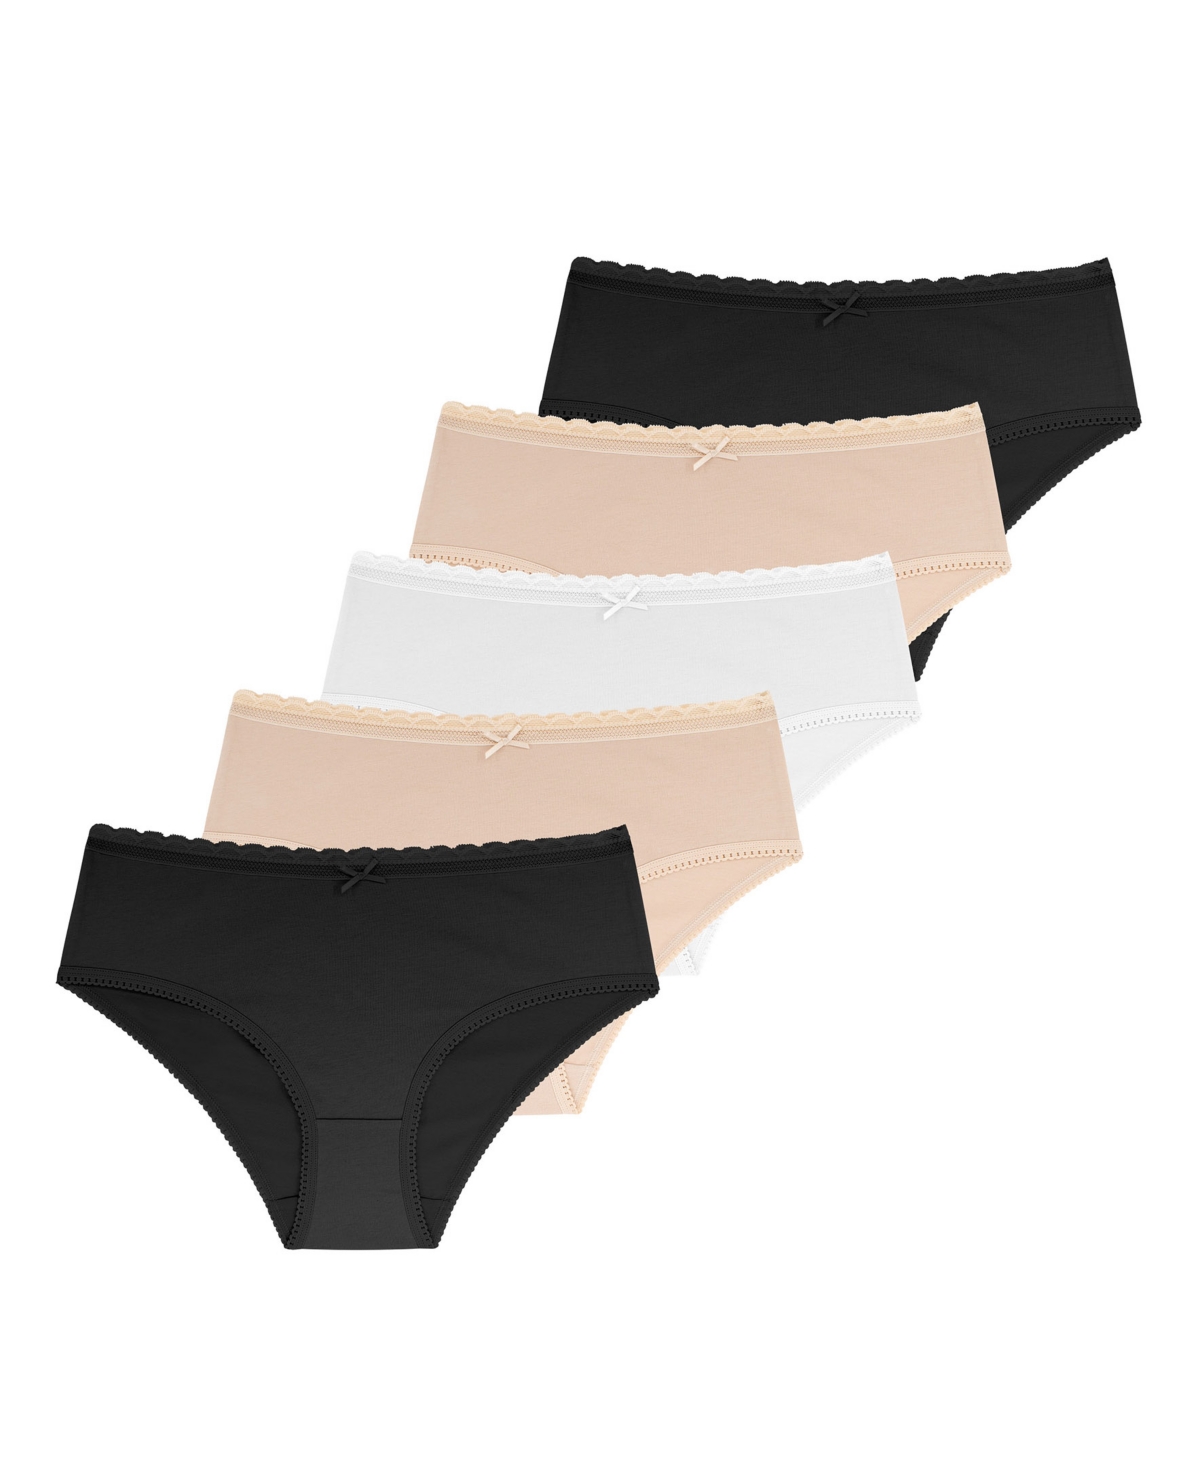 Dorina Women's Naomi 5 Pack Soft Cotton Brief Panties In Black,beige,ivory,beige,black